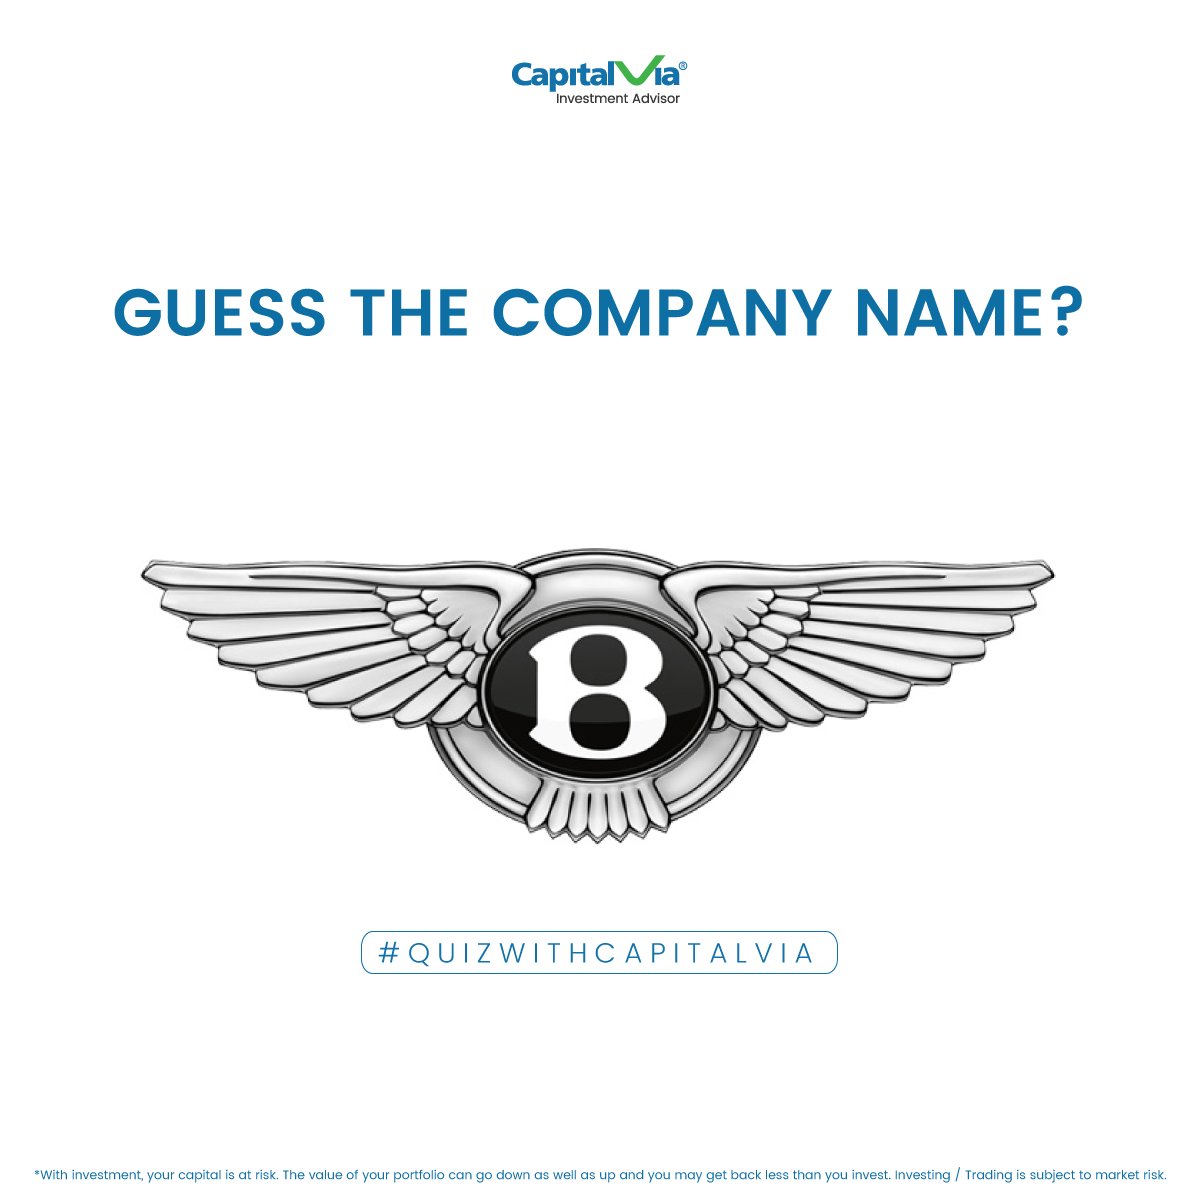 تويتر \ CapitalVia على تويتر: "Let's Guess the Company logo? Do let us know your with #quizwithcapitalvia comment section. #CapitalVia #InvestmentAdvisor #knowledge #quiz #information #brainstorming #quiz #gk #quizinstagram #